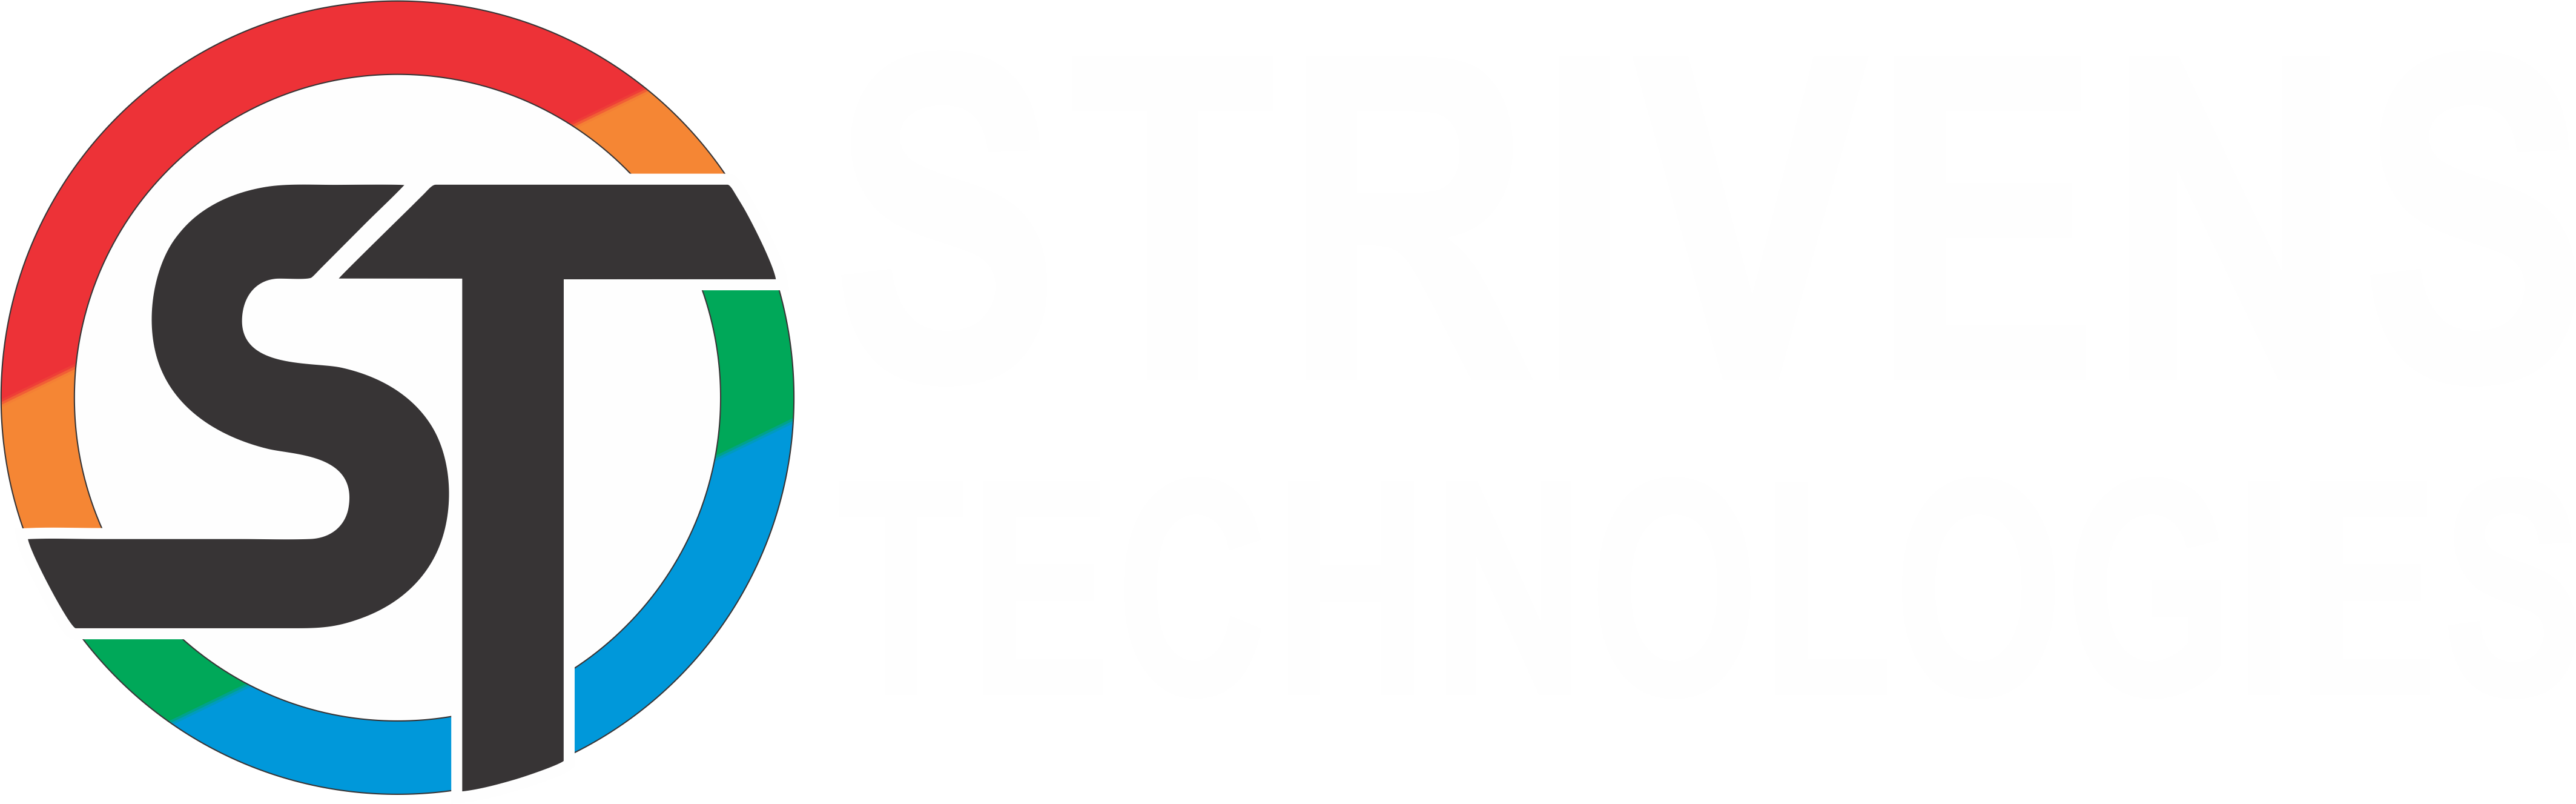 Strivens Technologies